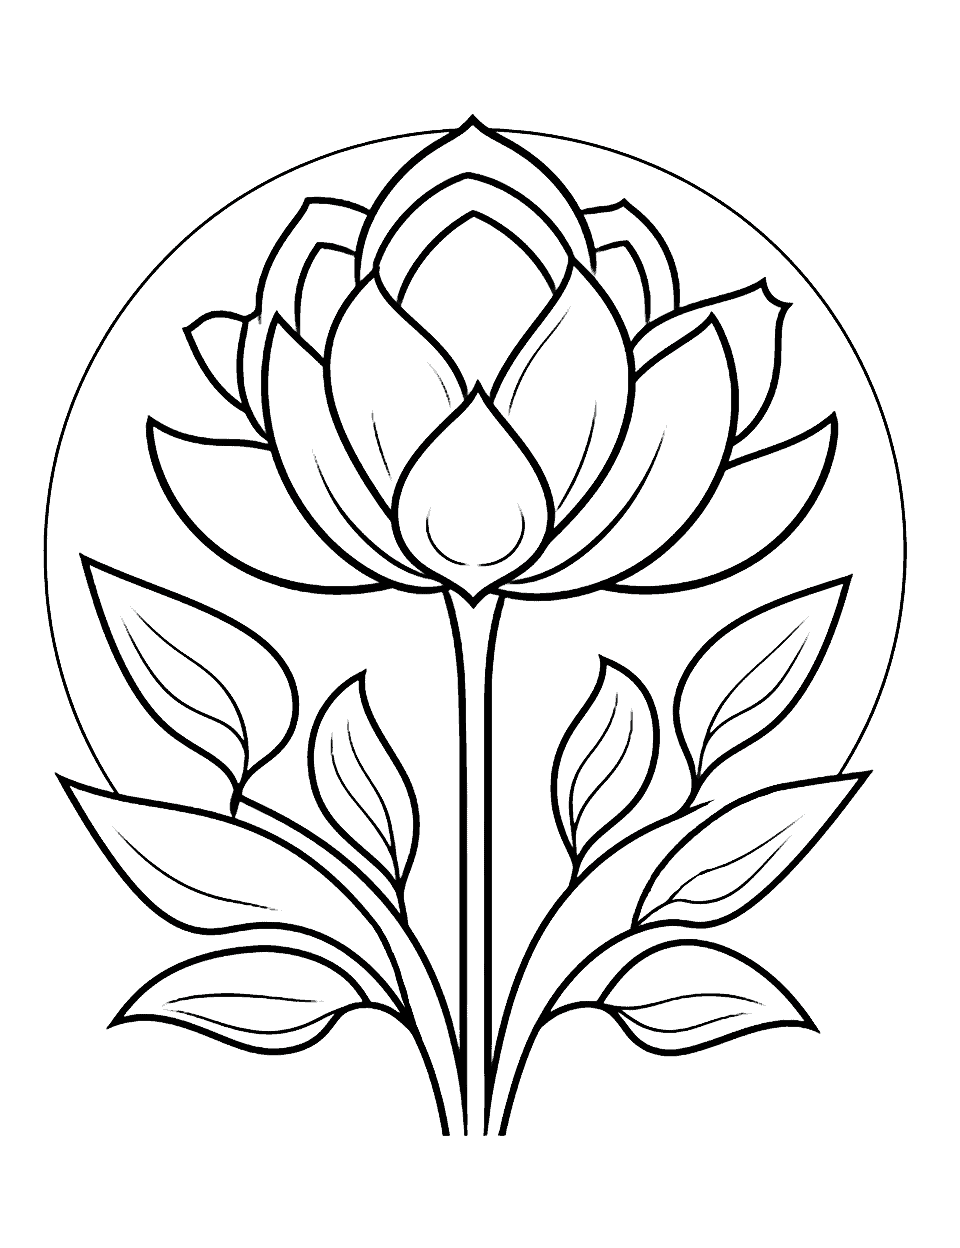 Pretty Tulip Mandala Flower Coloring Page - A pretty mandala design incorporating tulips.